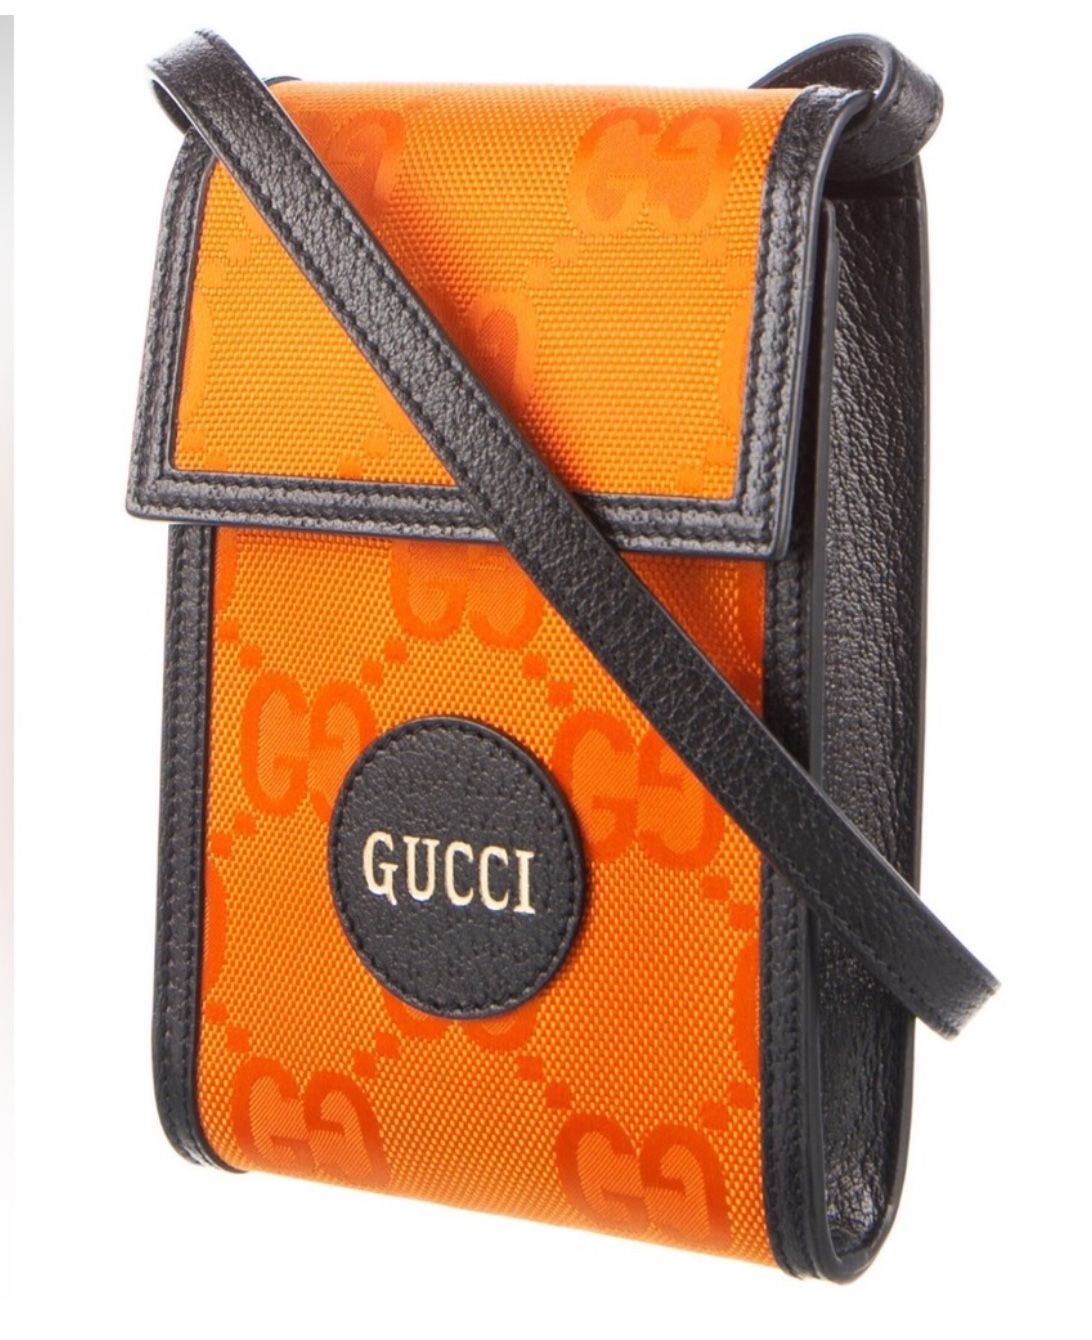 SALE!!! Gucci GG supreme monogram logo unisex "Off the grid" messenger bag NEW